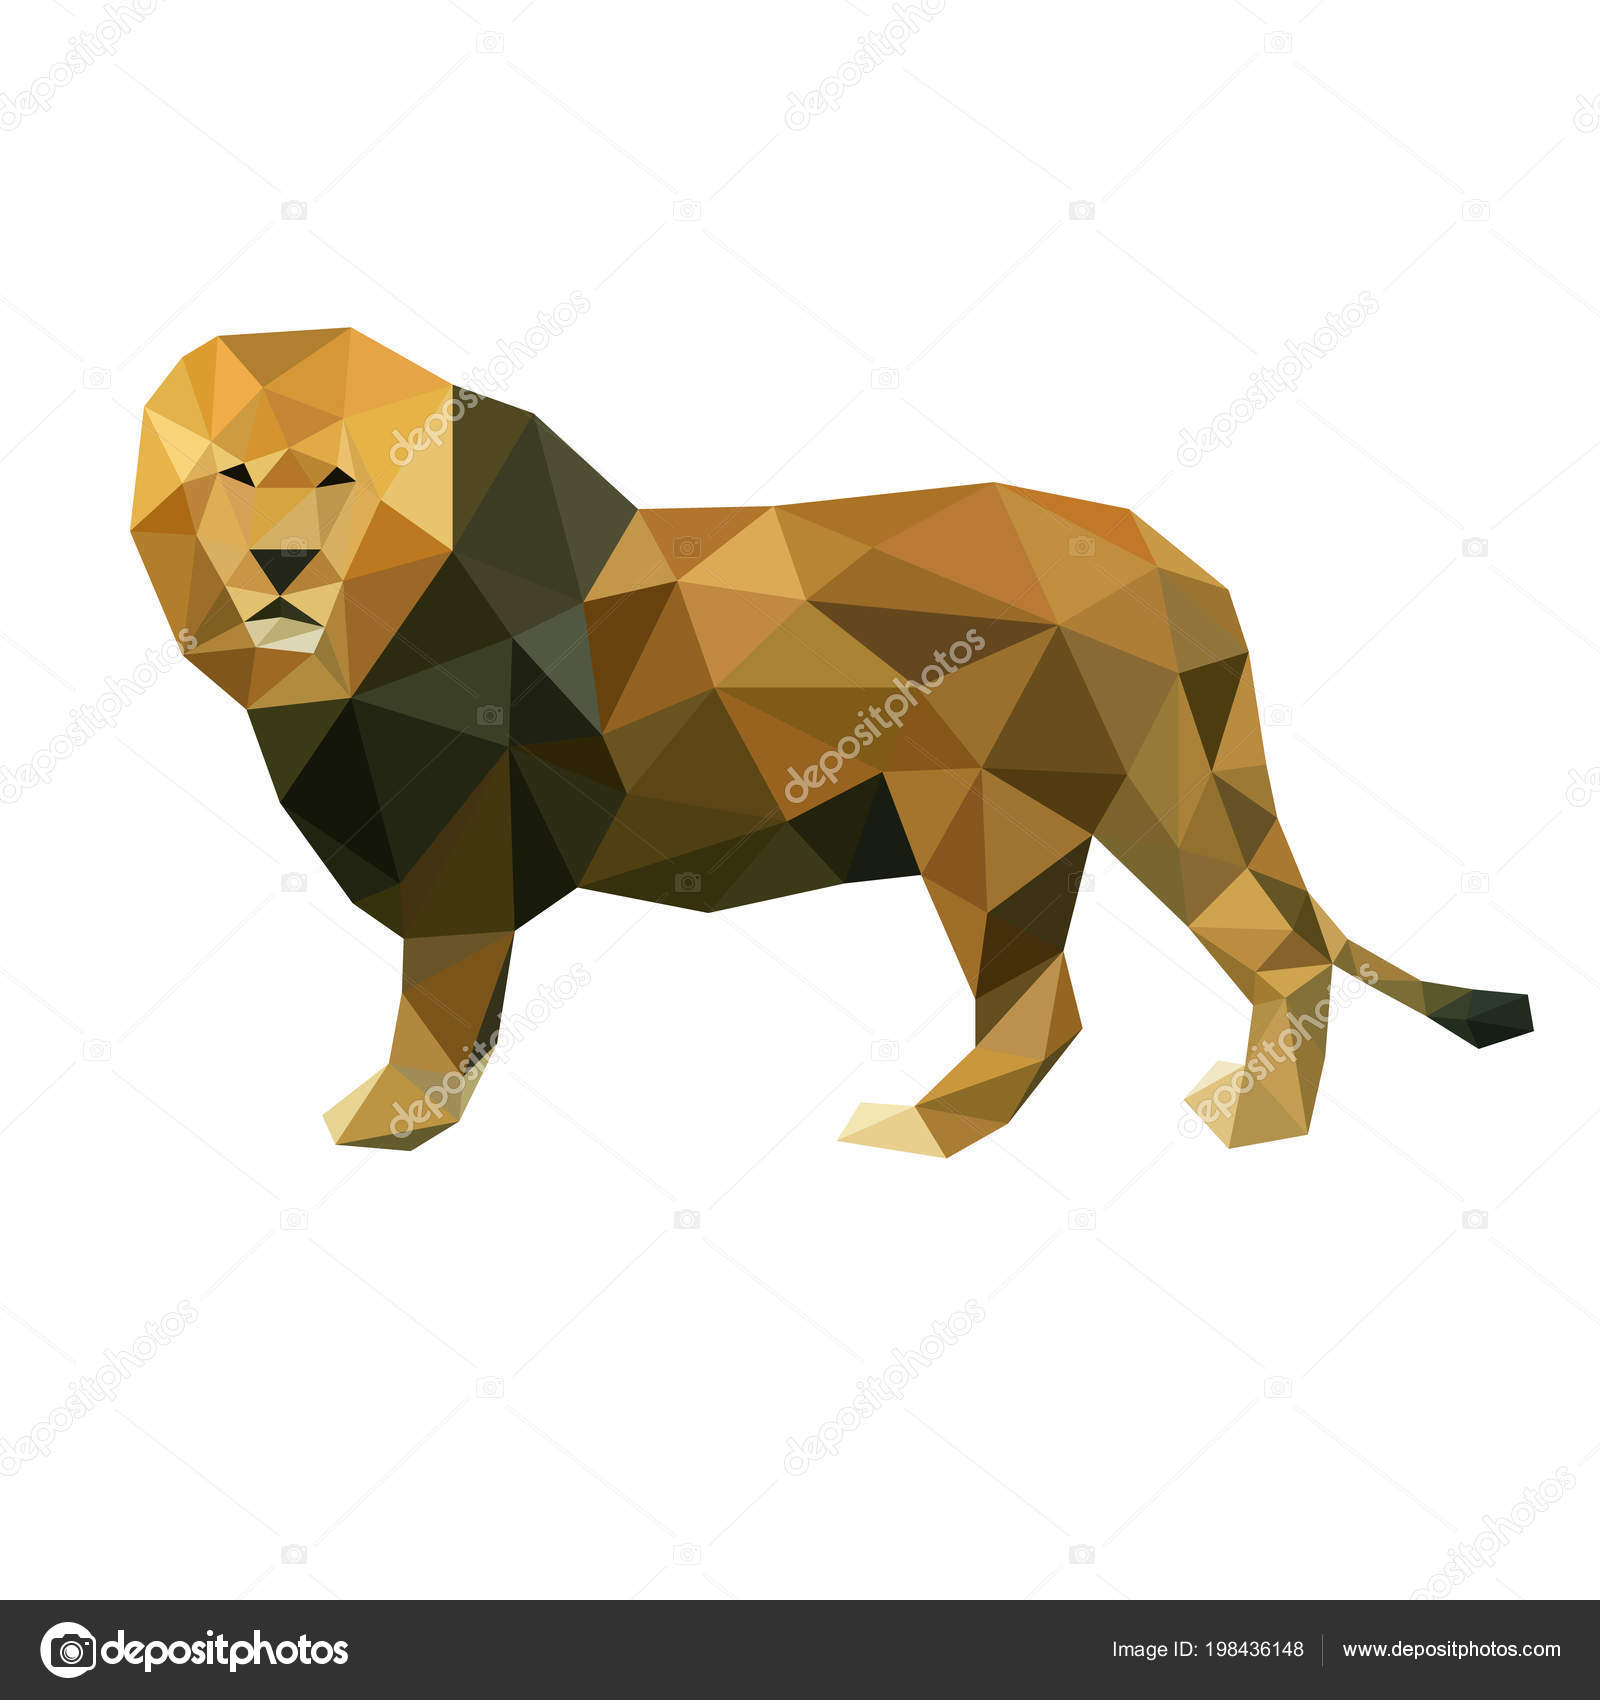 Lion Chart